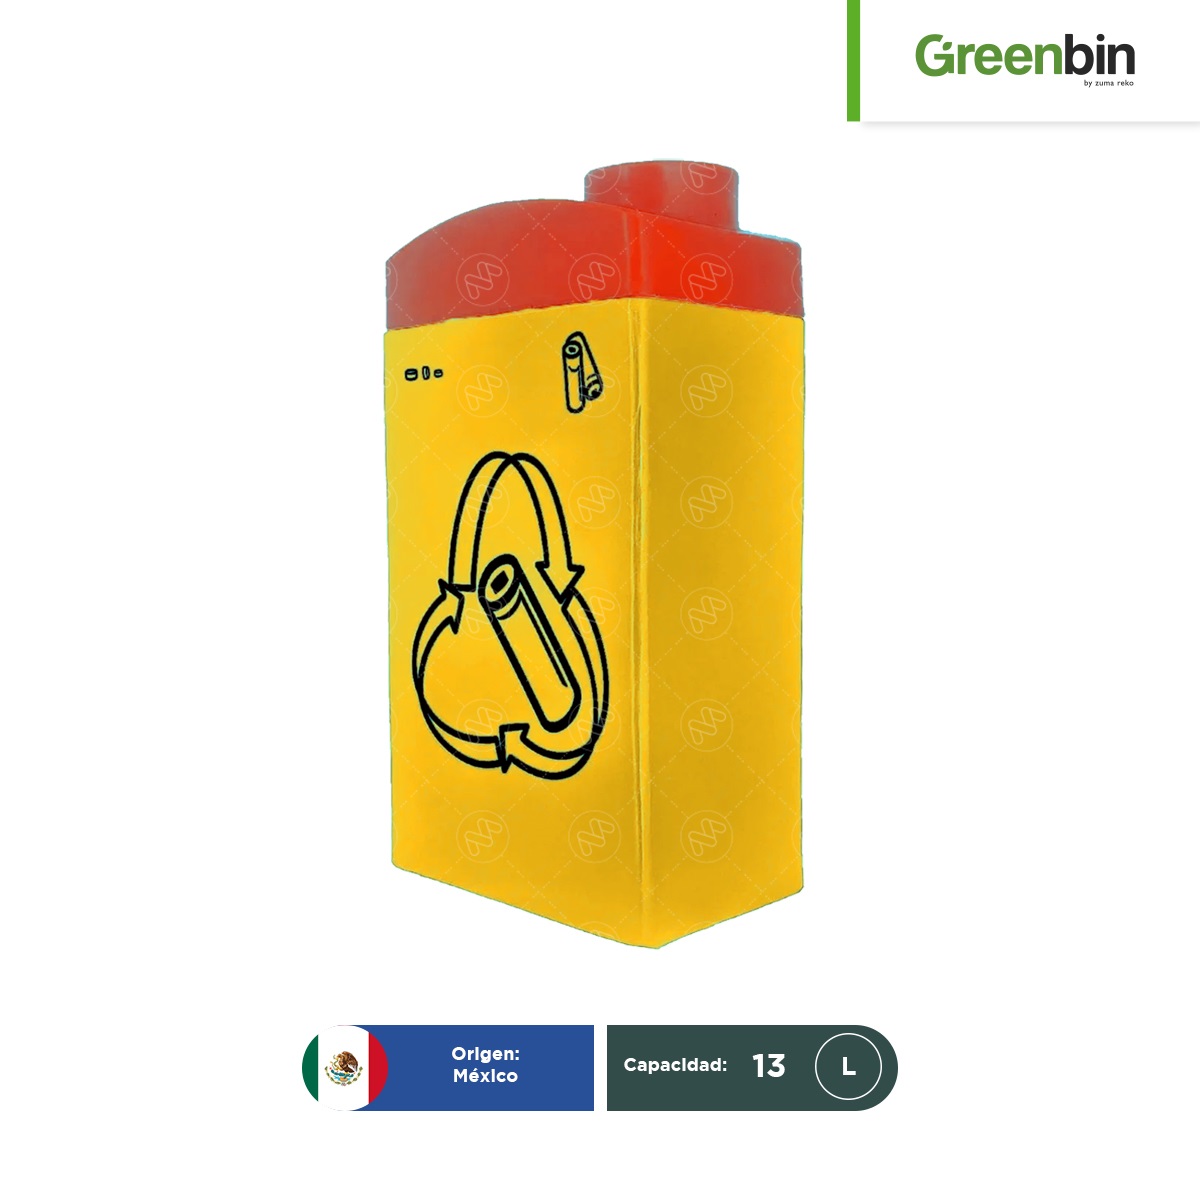 contenedor para pilas usadas probattery 13 l greenbin 002